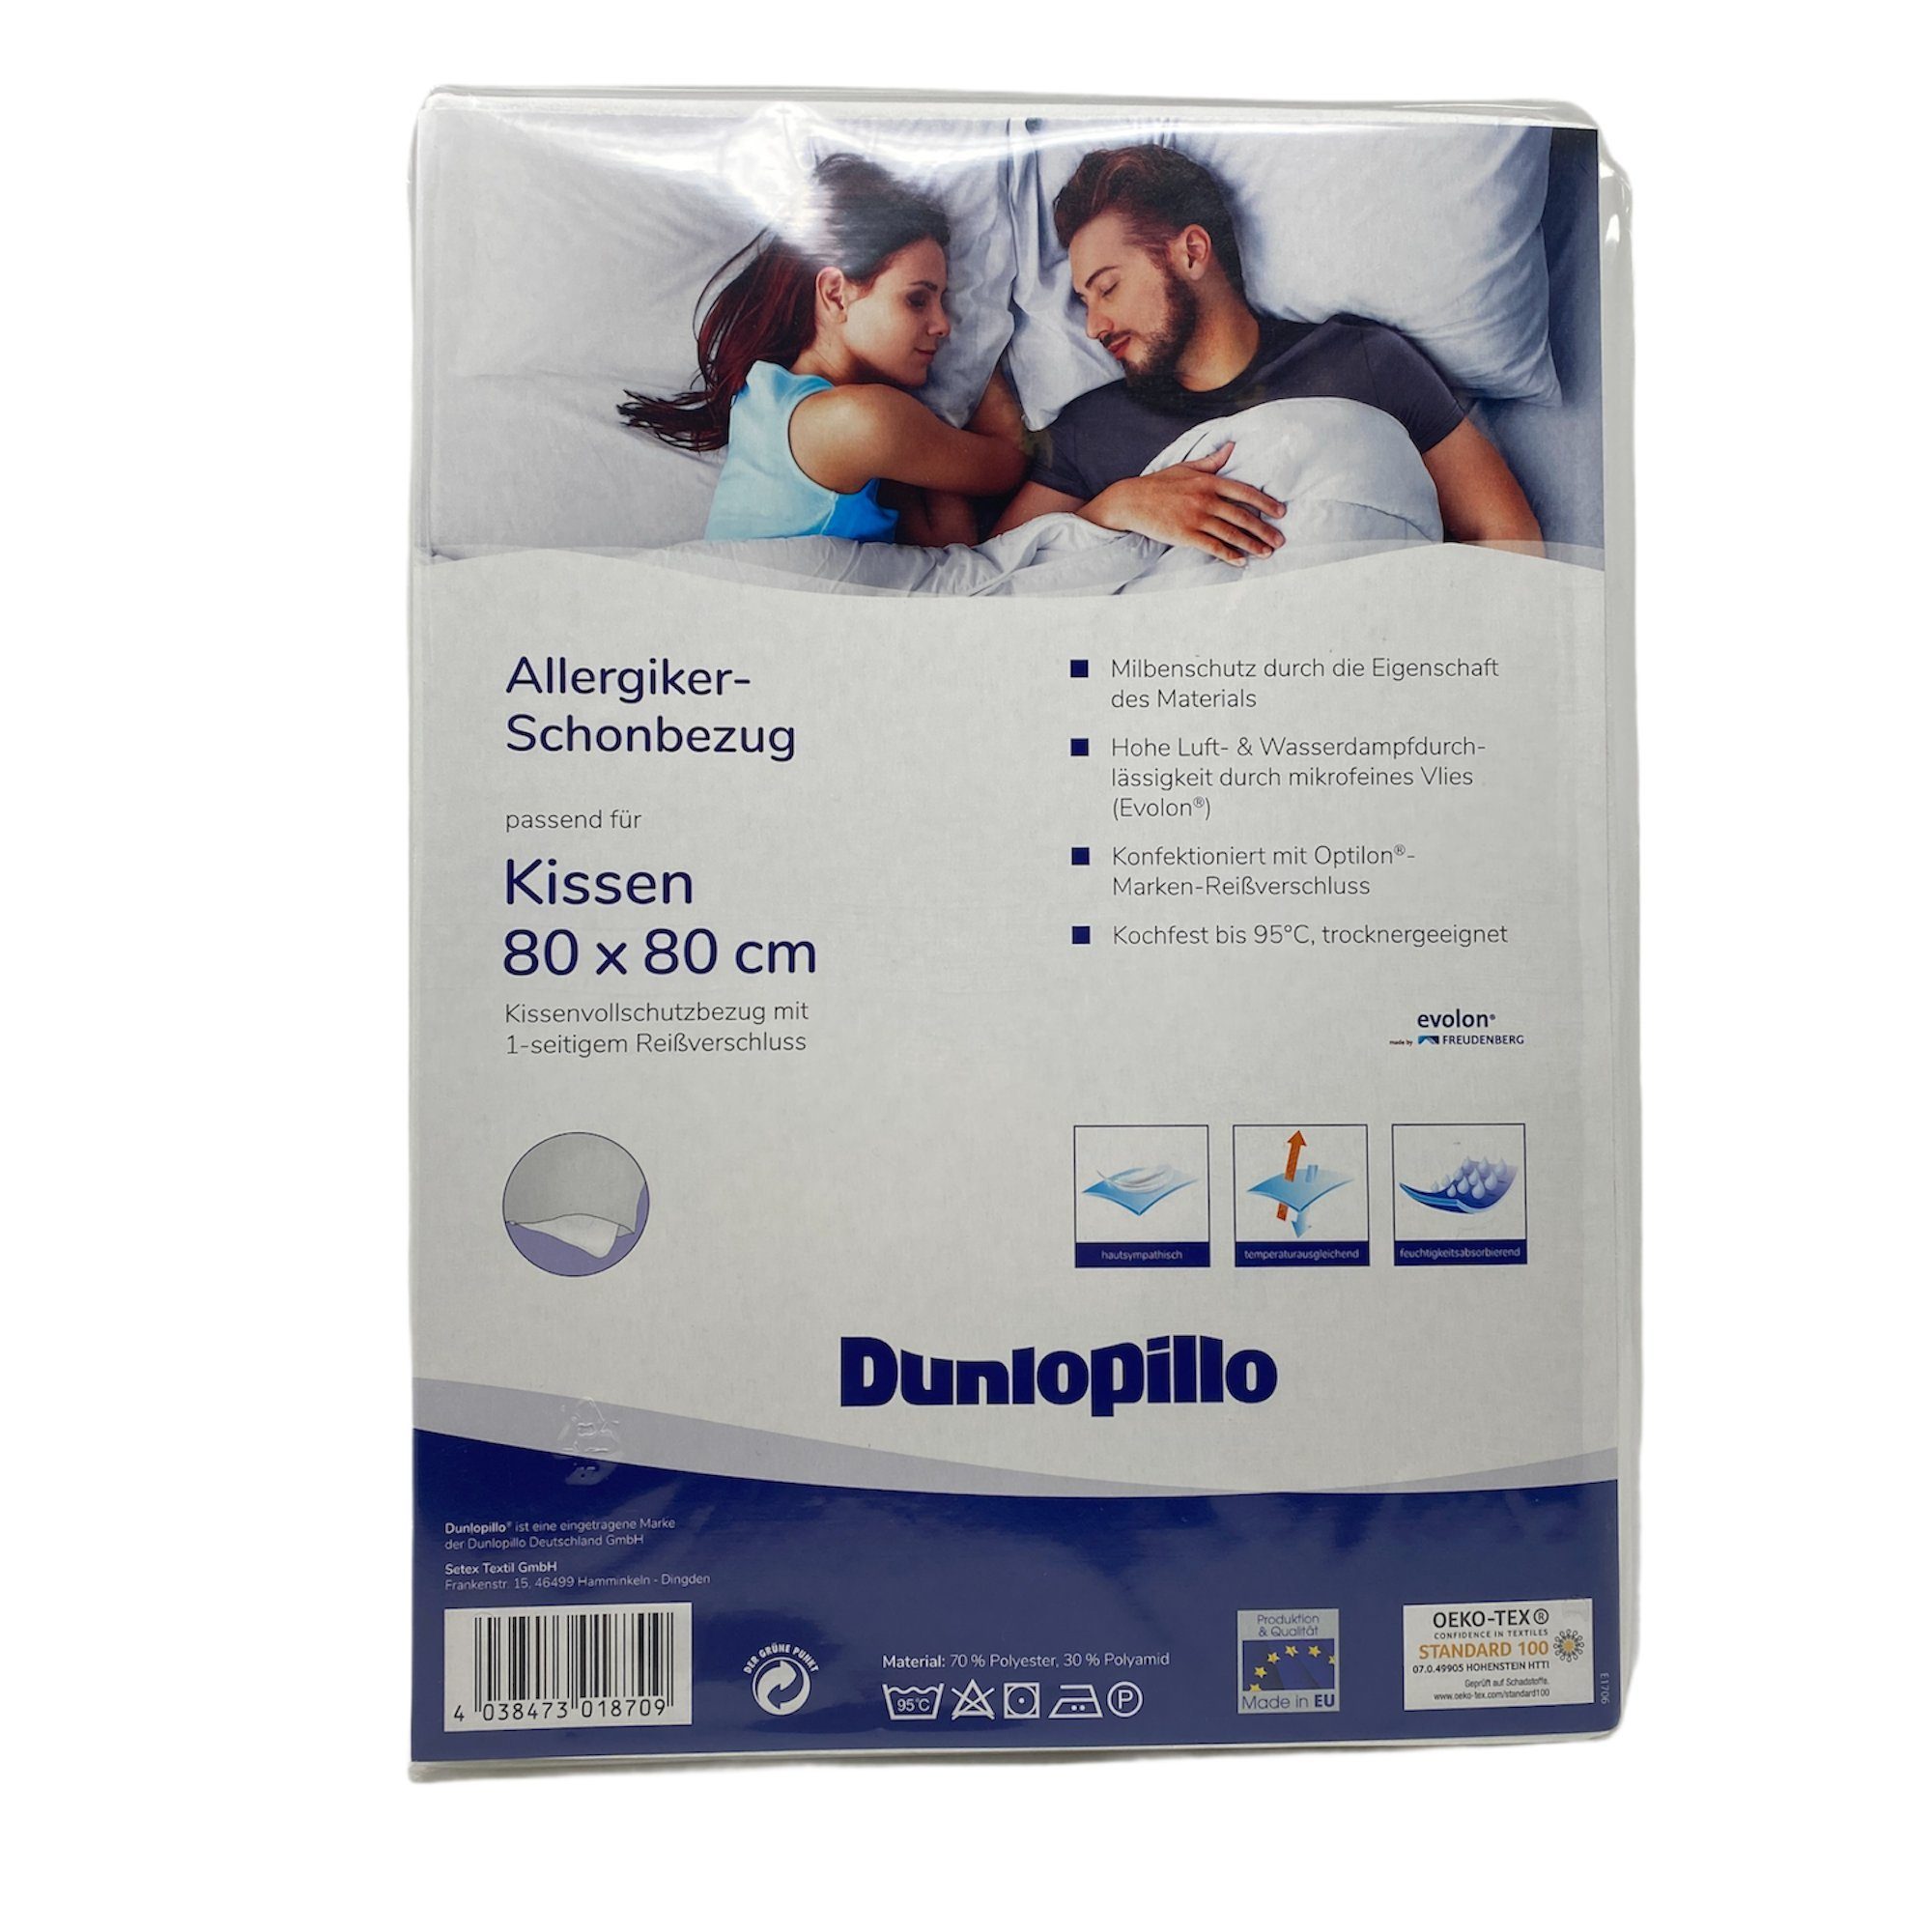 Kissenbezüge »Dunlopillo Allergiker Schonbezug für Kopfkissen 80x80cm  Kissenvollschutz Bezug«, Dunlopillo (1 Stück)